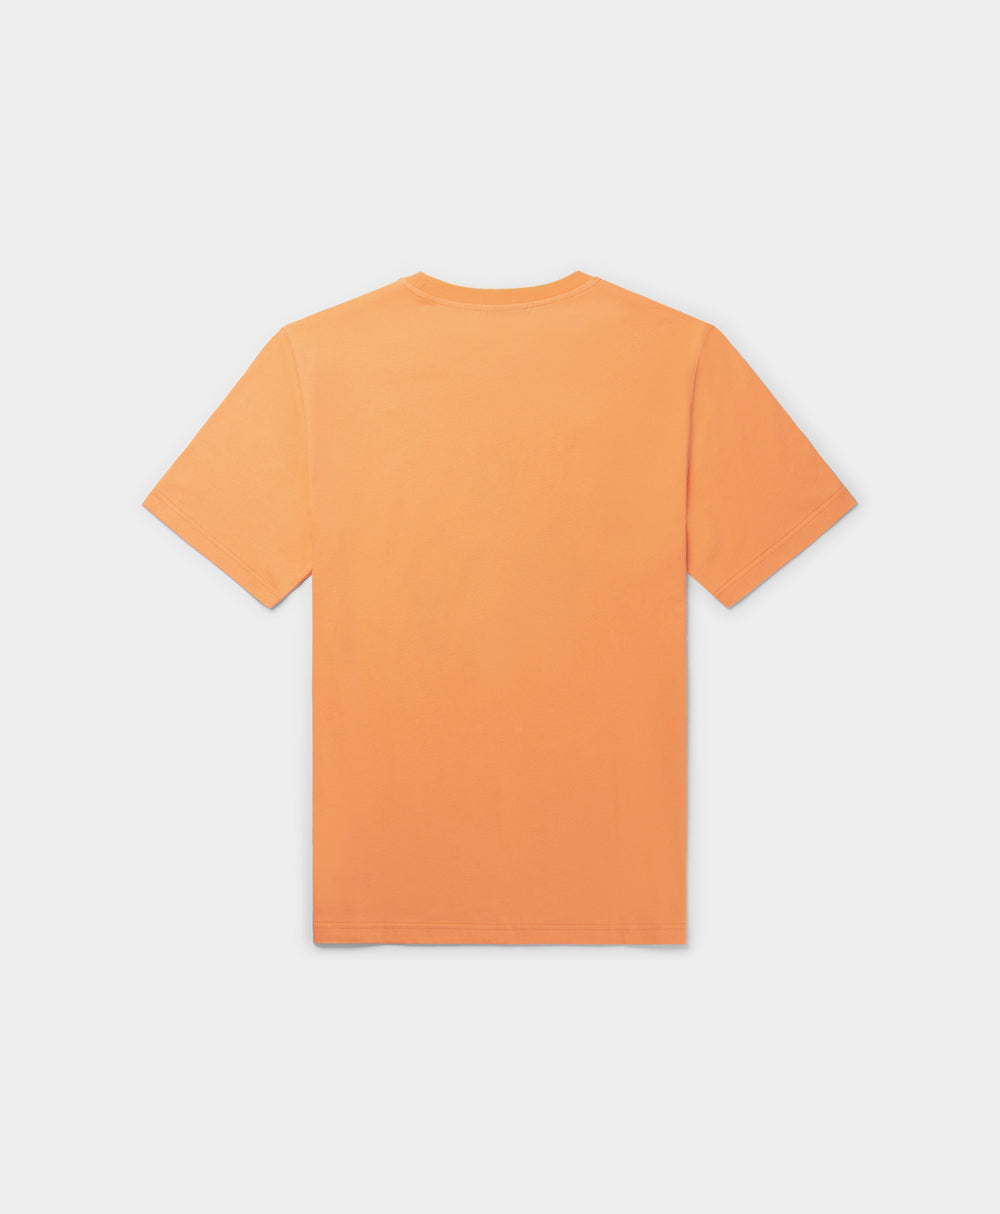 DP - Tangerine Orange Rivo T-Shirt - Packshot - Rear